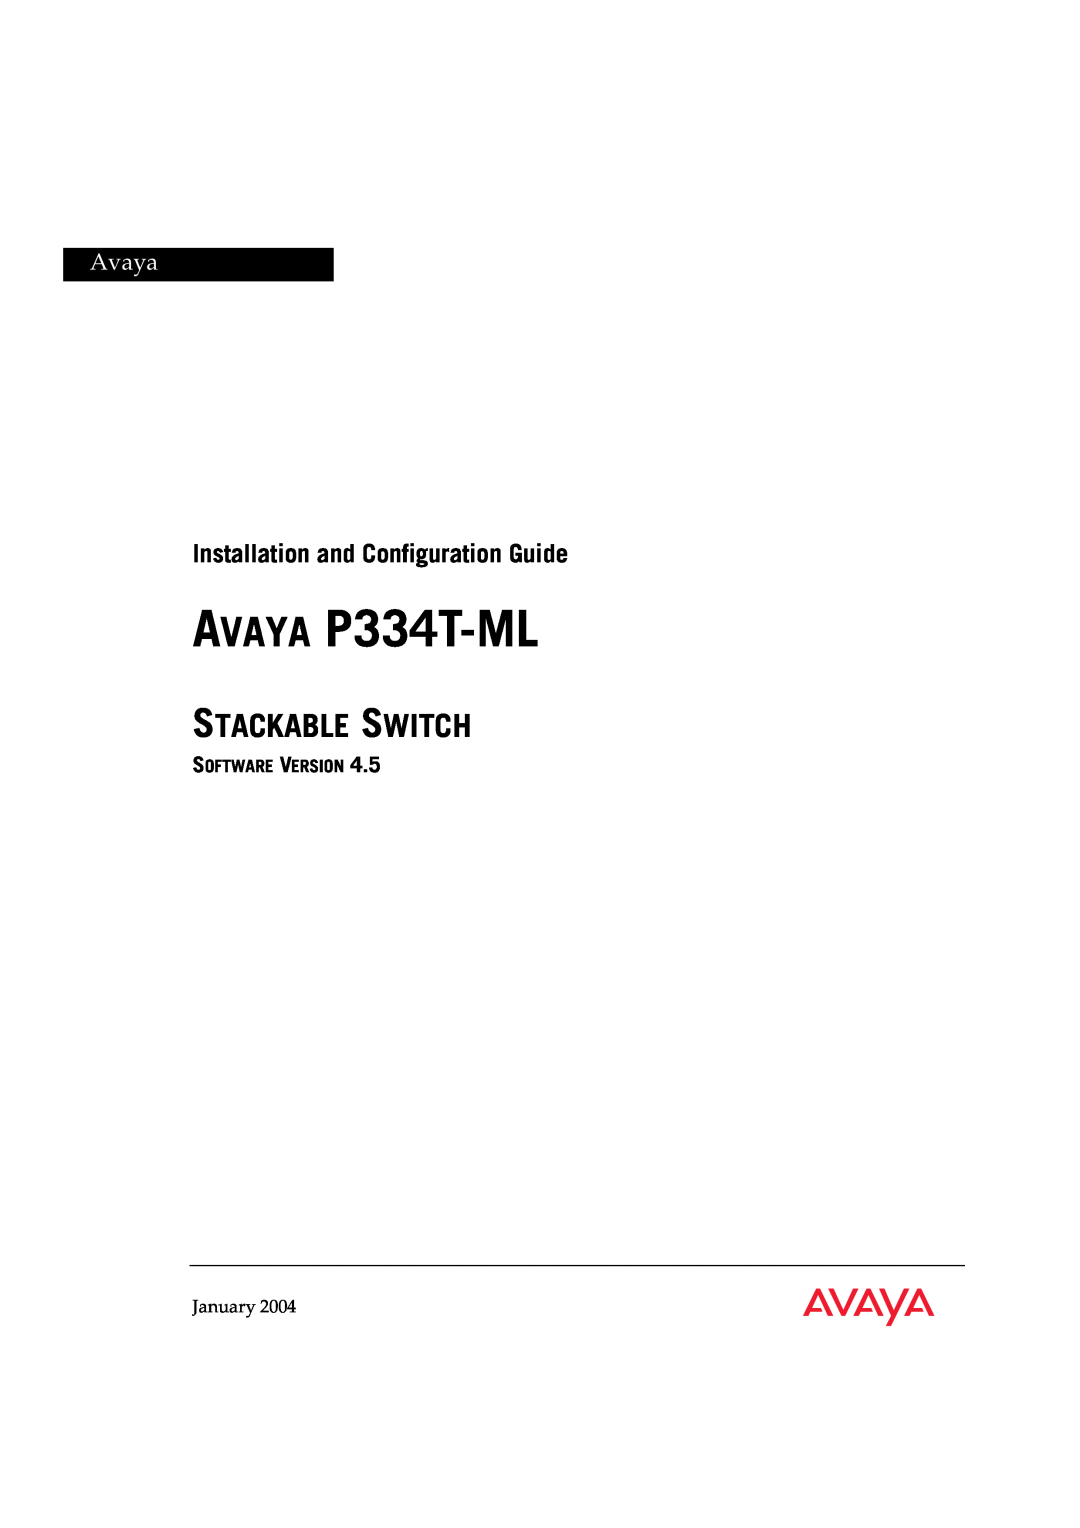 Avaya P3343T-ML manual Stackable Switch, Software Version, AVAYA P334T-ML, Installation and Configuration Guide, Avaya 